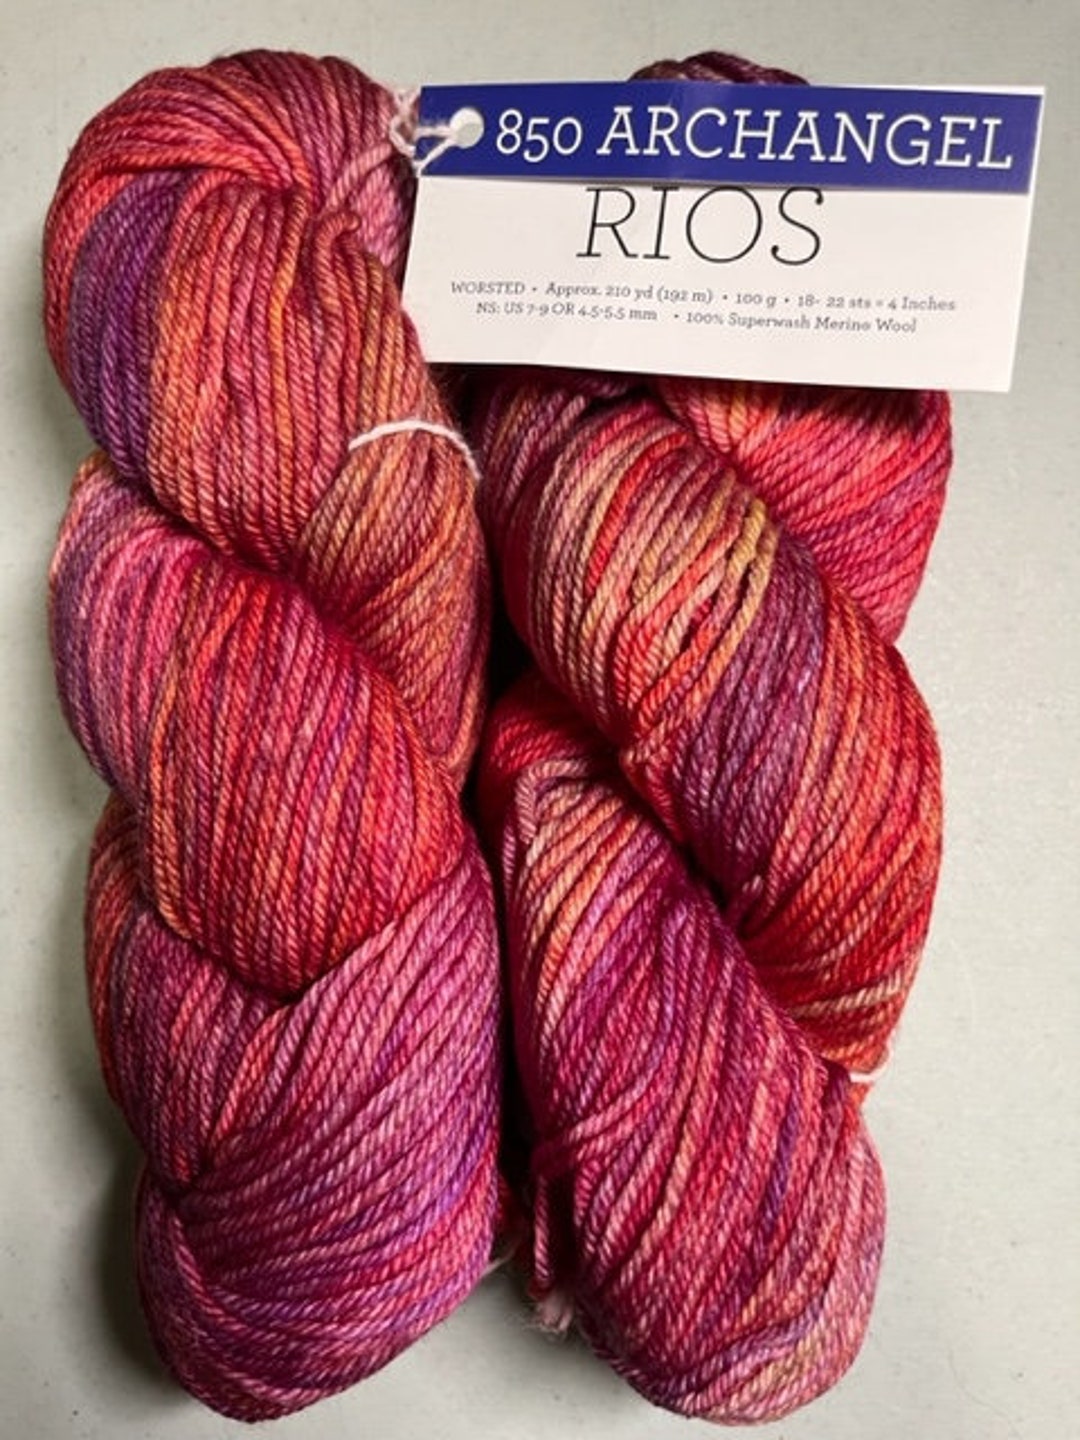 Malabrigo Rios yarn at The Endless Skein